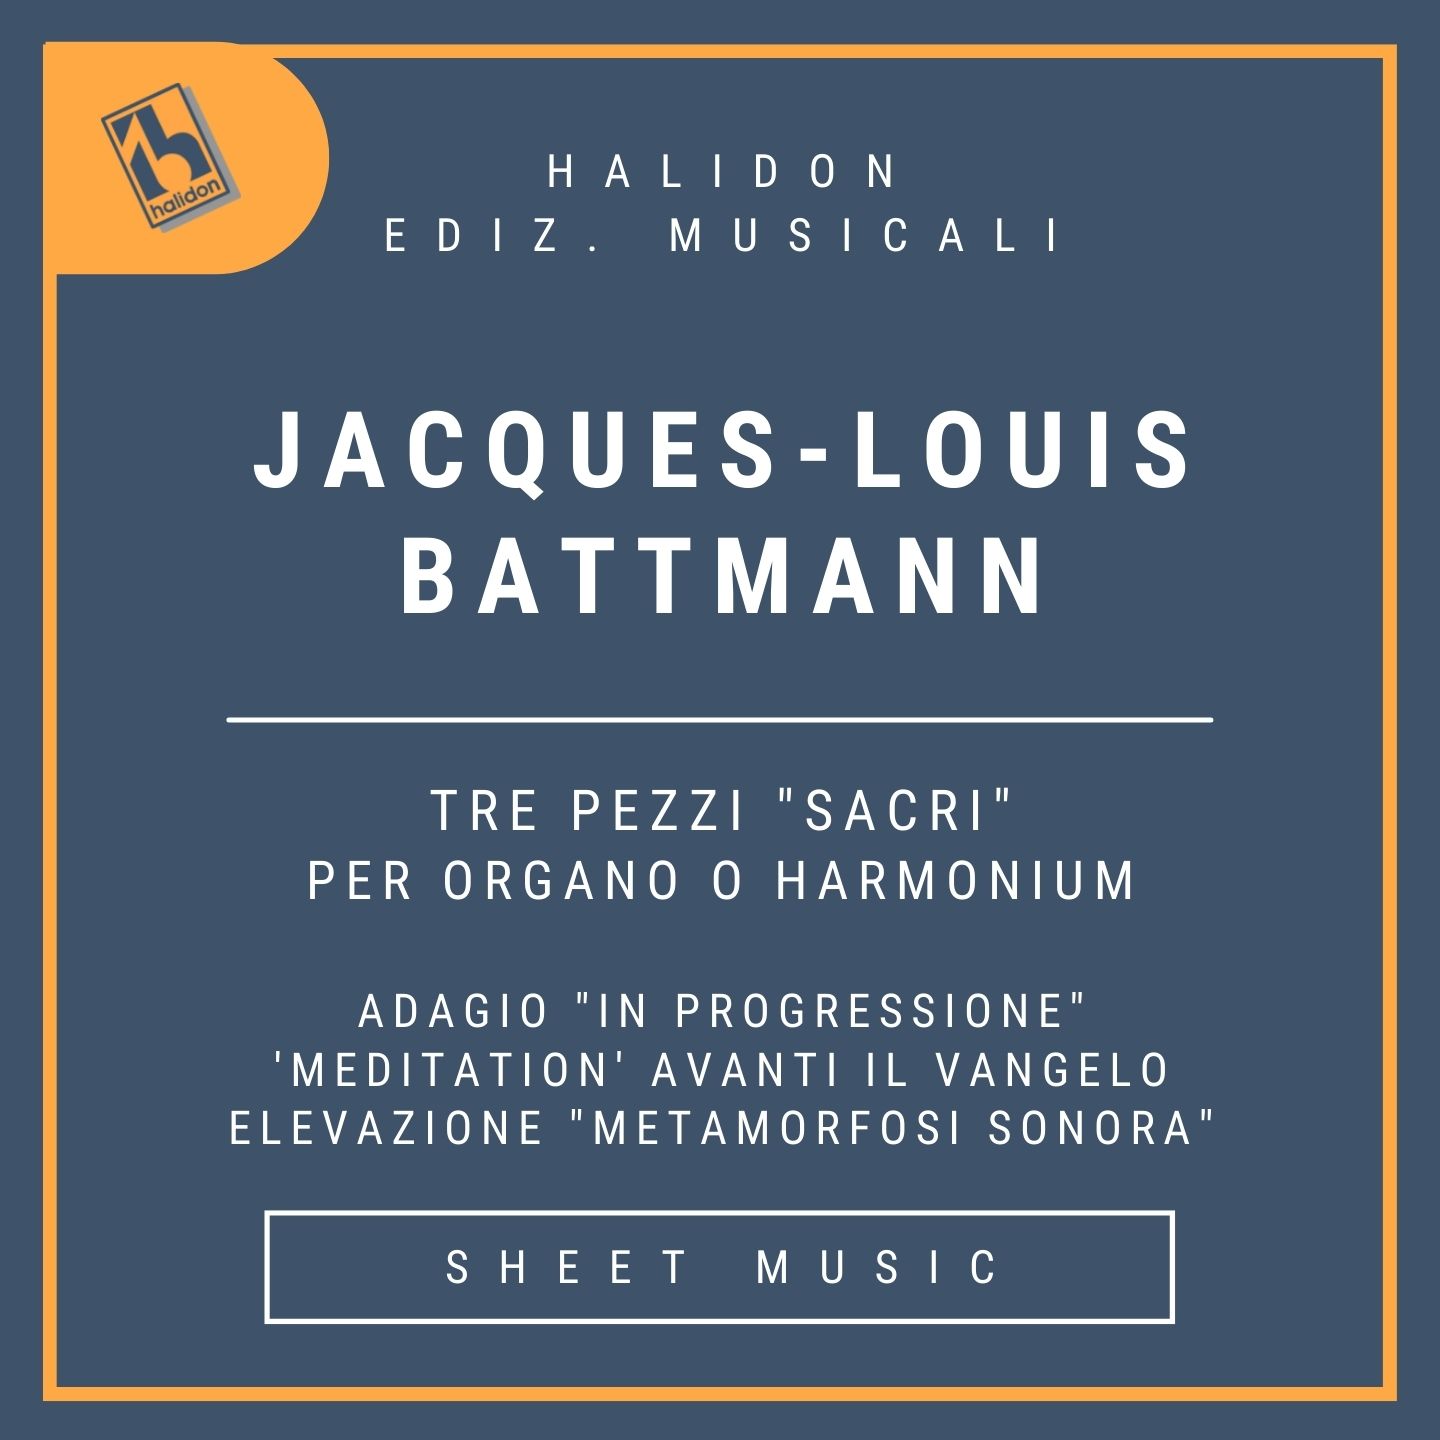 Jacques-Louis Battmann - Tre pezzi 'sacri' per organo